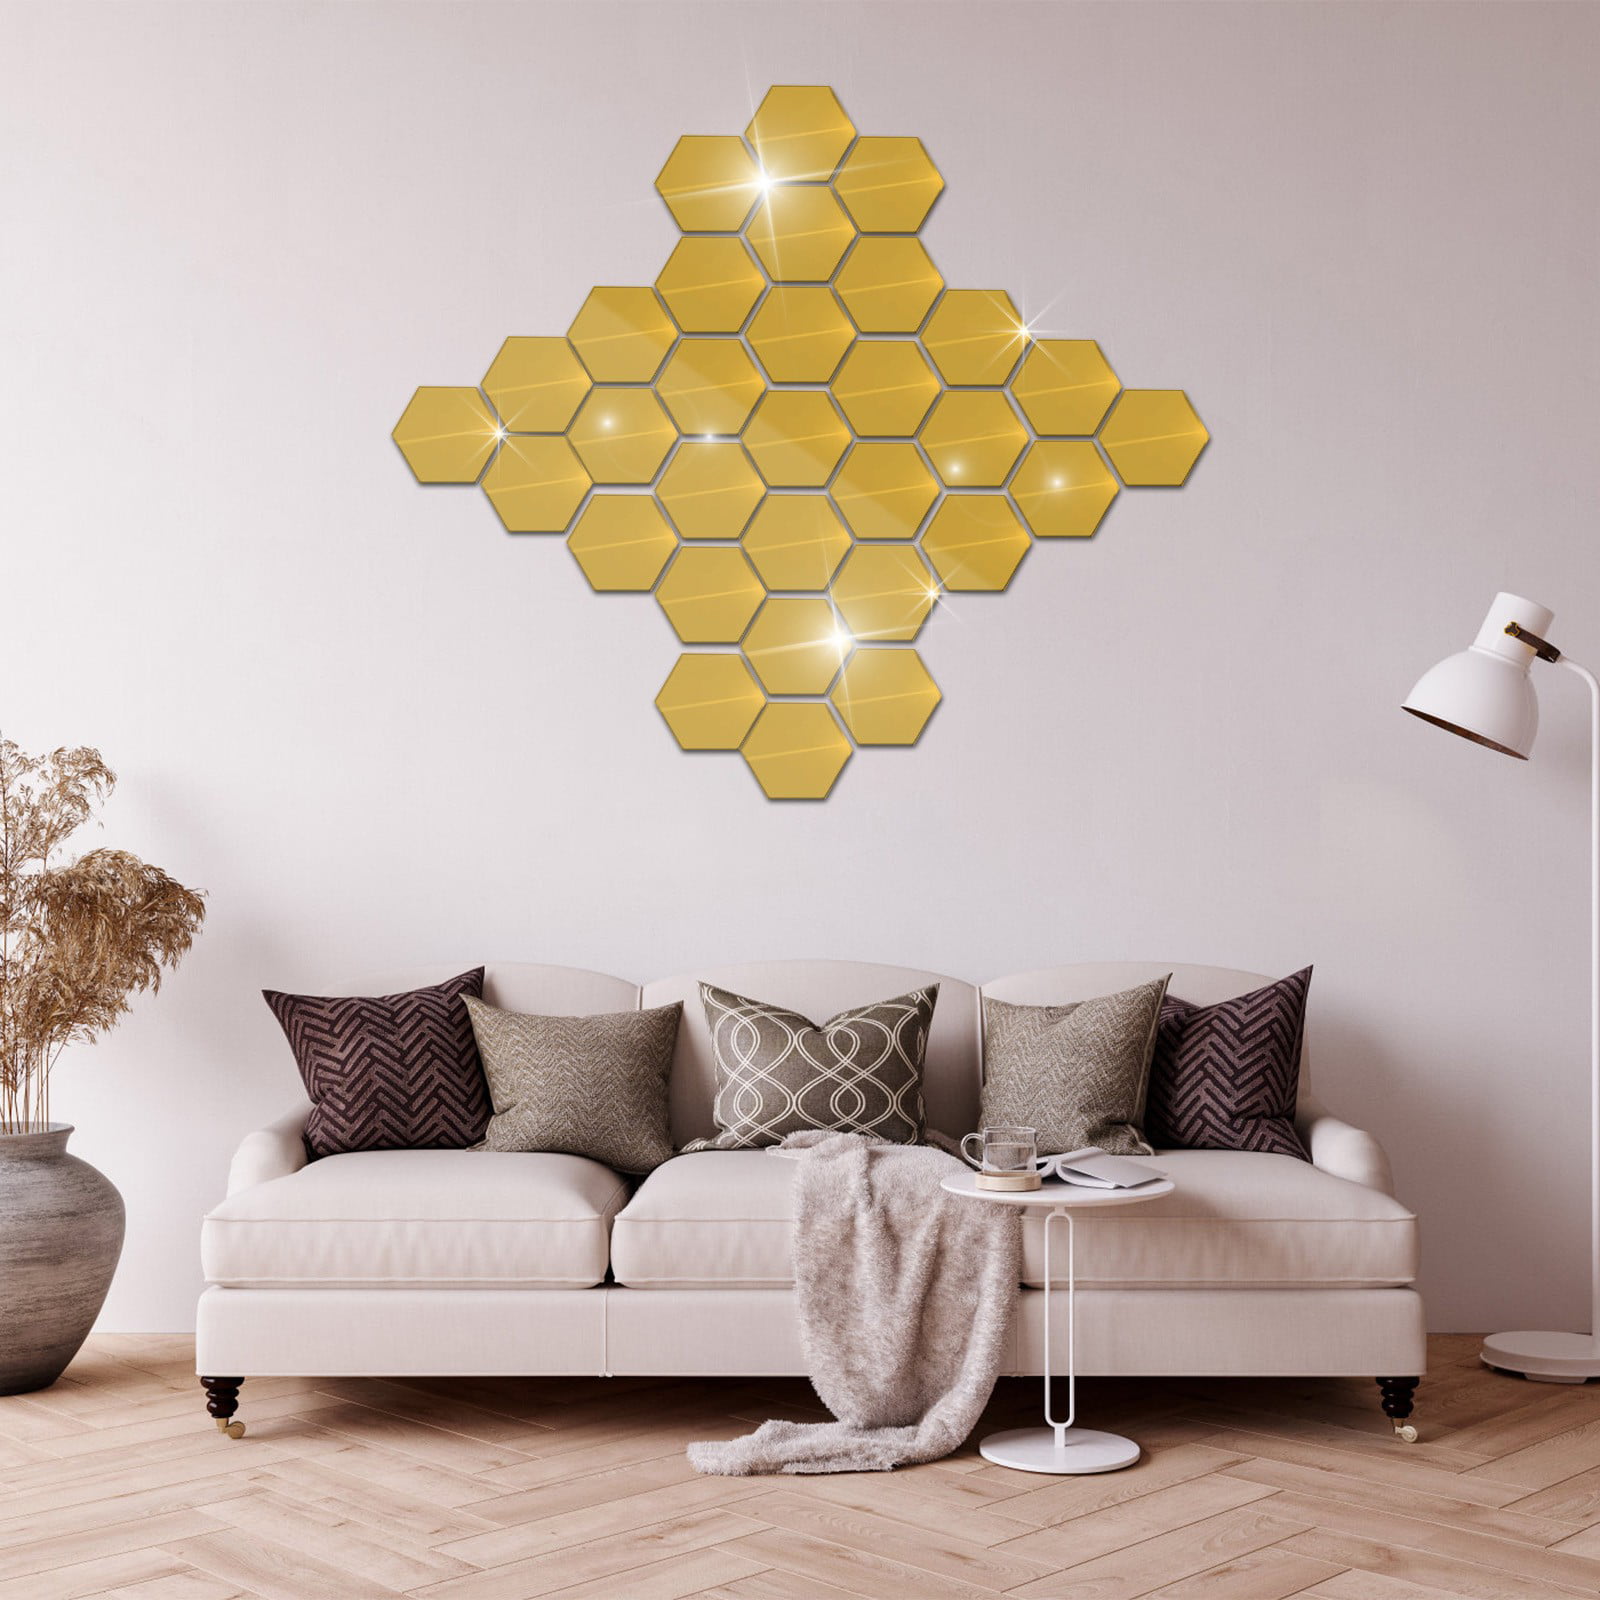 Wallpaper Stereo Wall Wall Art Hexagon 3D Decor Wall Acrylic Diy And Home Decor Sticker Peel Stick With MSJUHEG Gold Adhesive Mirror